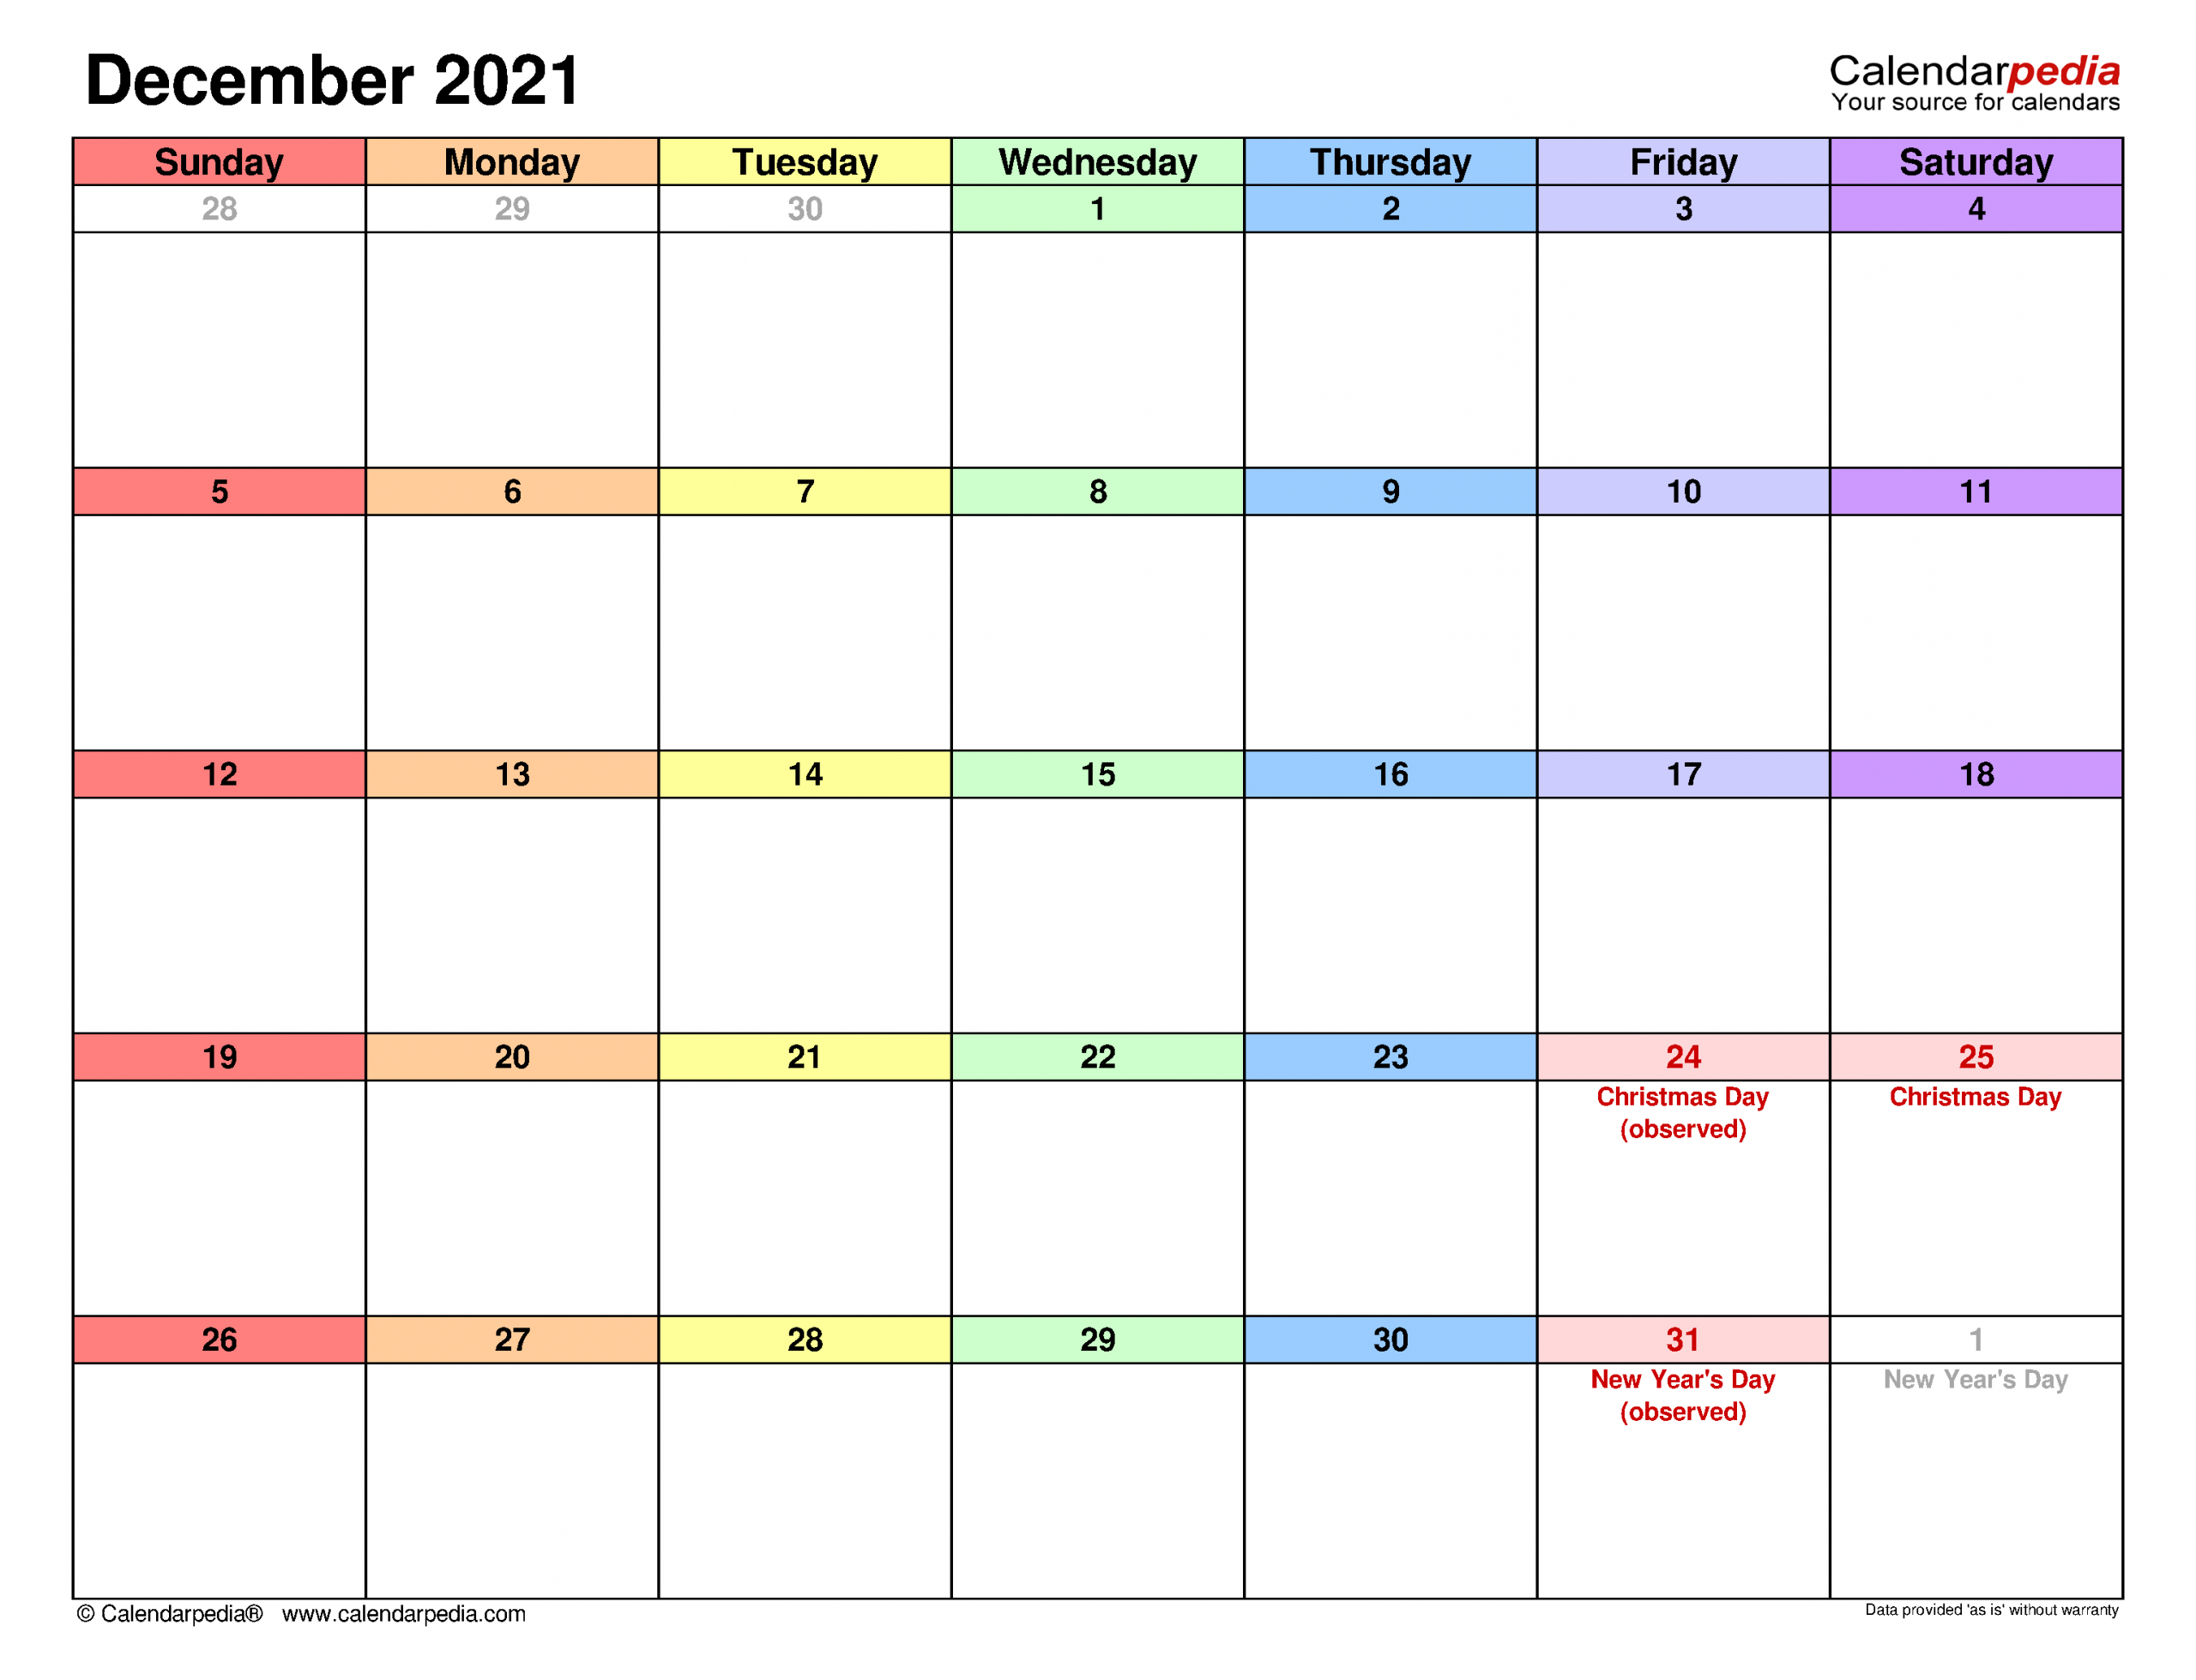 December 2021 Calendar | Templates For Word, Excel And Pdf Calendar For December 2021